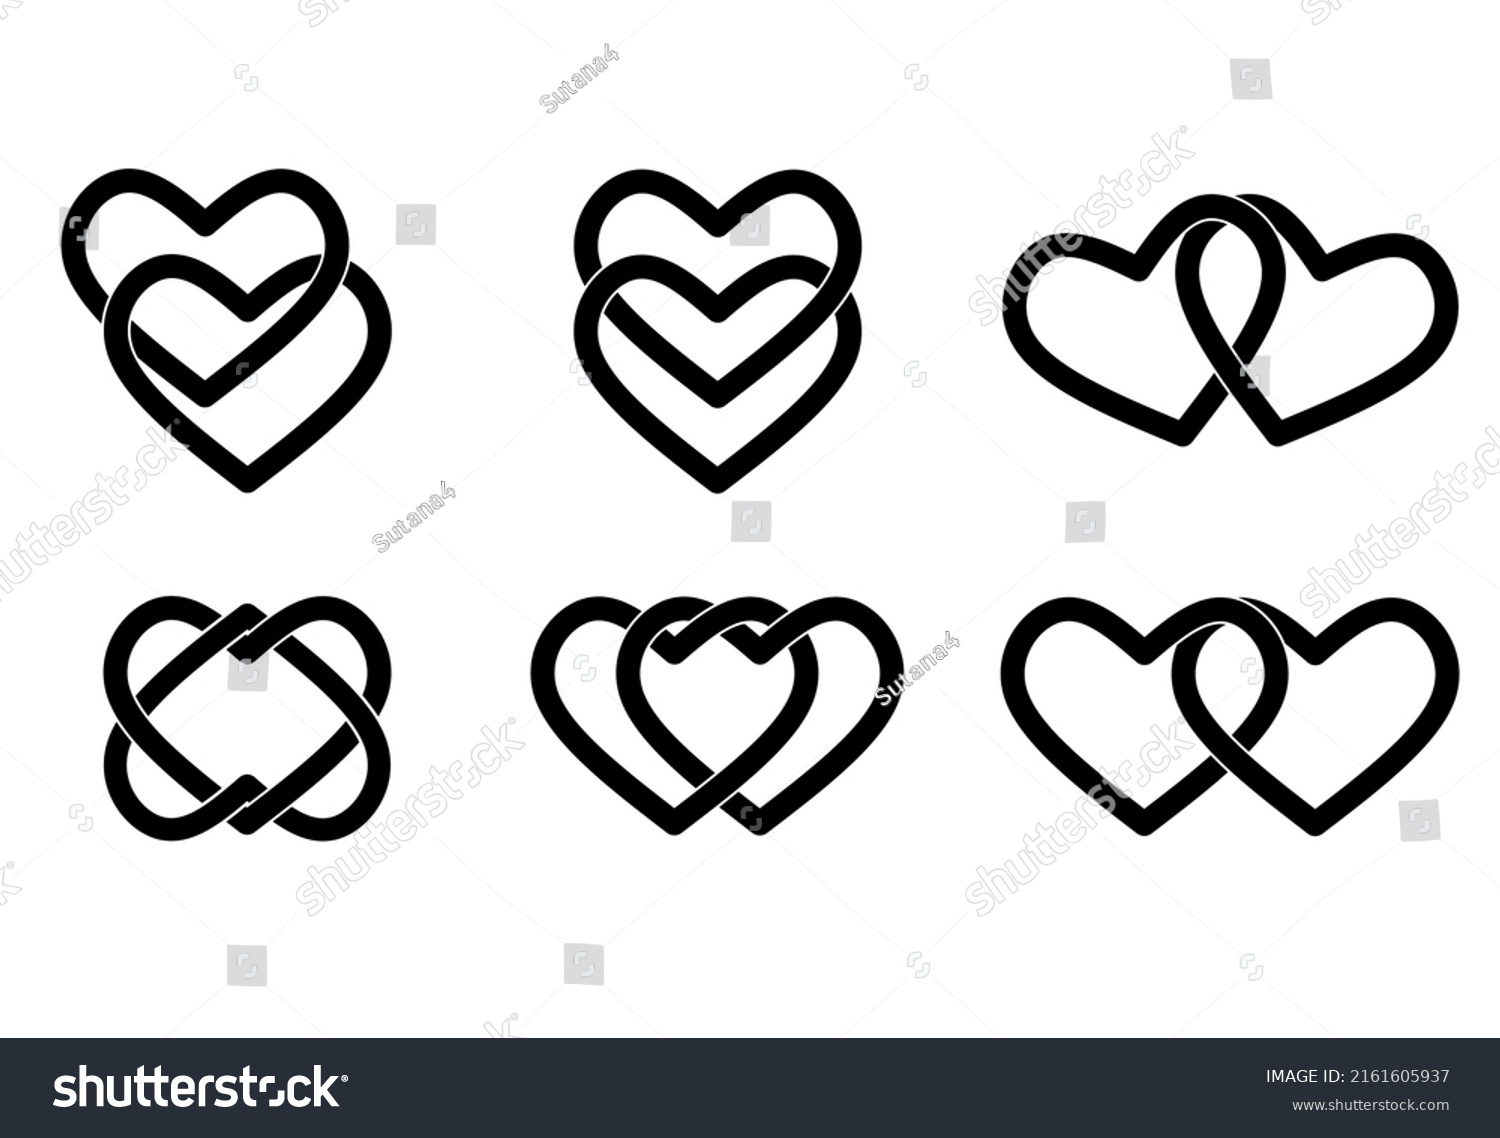 SVG of linked hearts icon set on white background svg